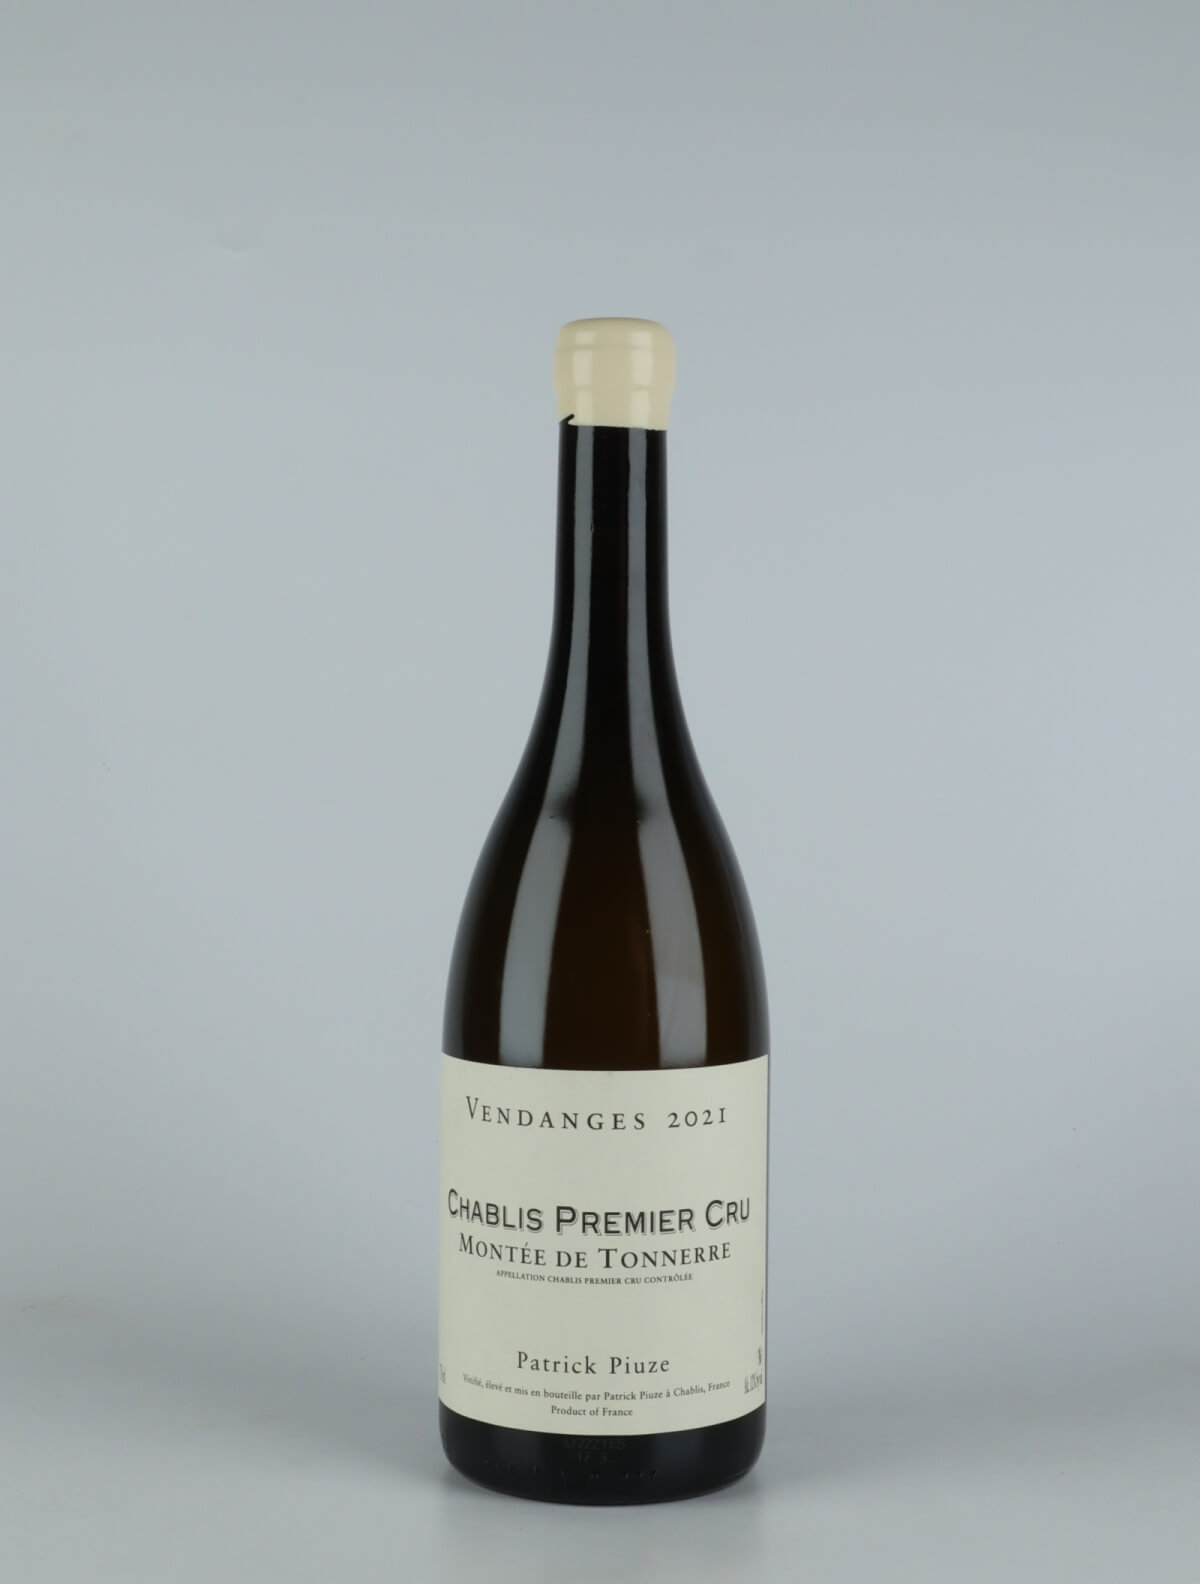 A bottle 2021 Chablis 1. Cru - Montée de Tonnerre White wine from Patrick Piuze, Burgundy in France